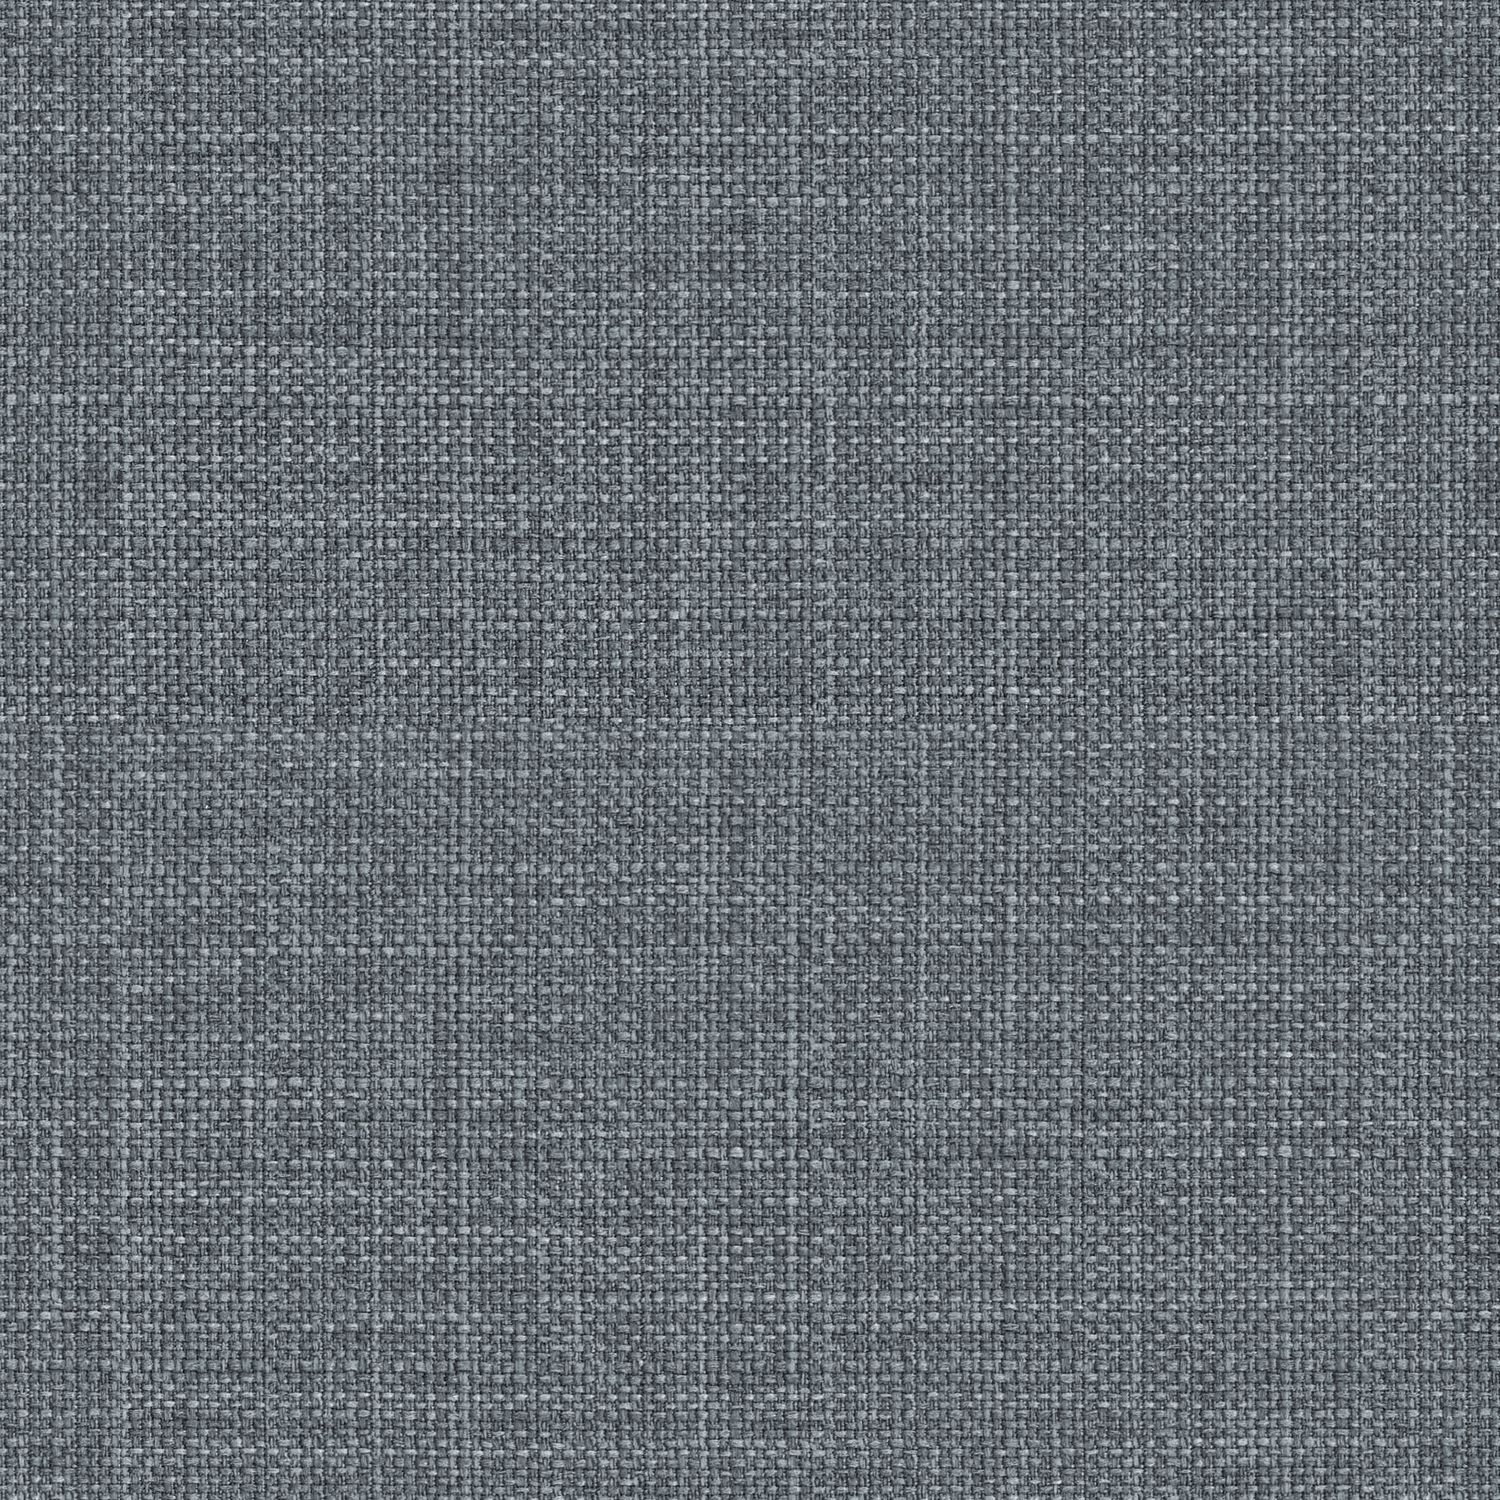 Grey Fabric Texture 2 